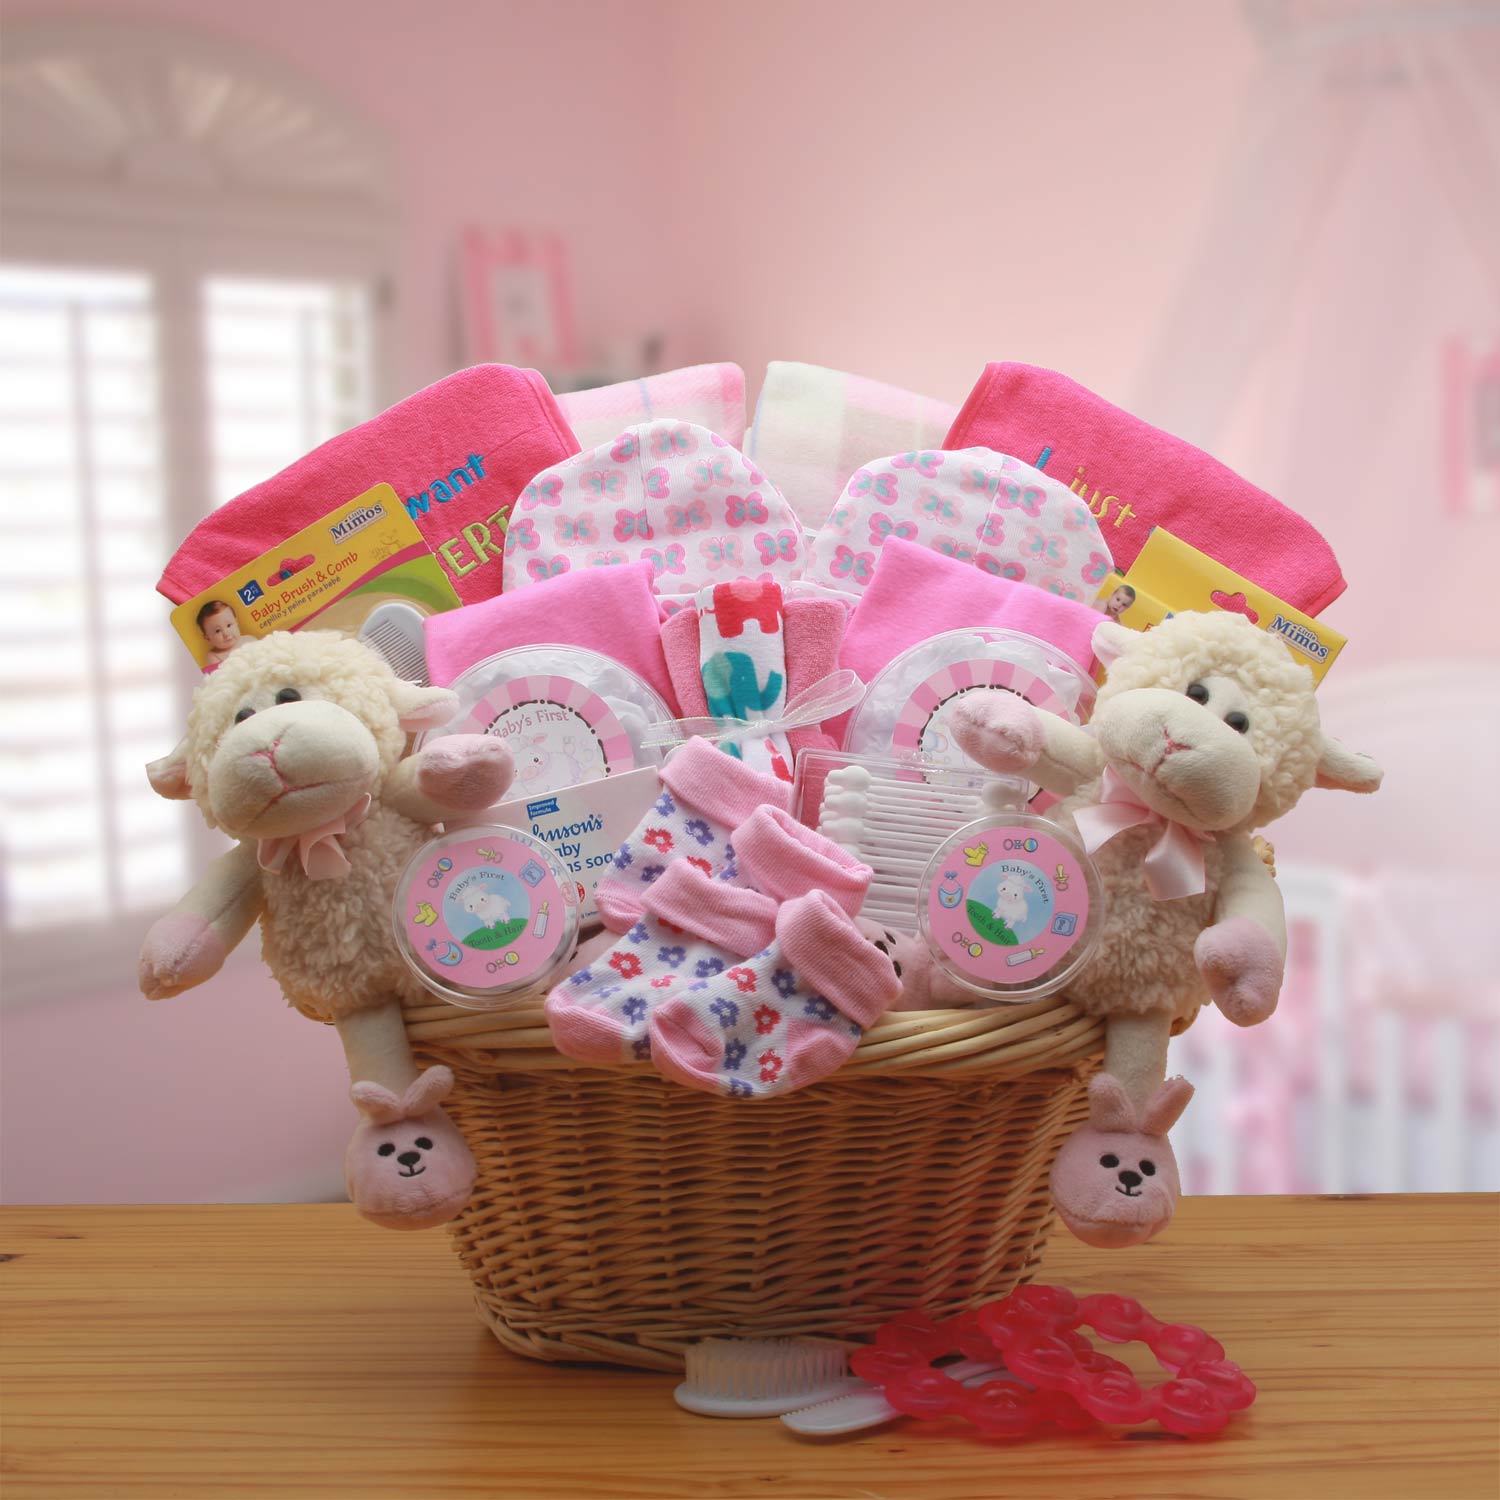 Double Delight Twins New Babies Gift Basket - Pink - baby bath set -  baby girl gifts - new baby gift basket - baby gift baskets - baby shower gifts